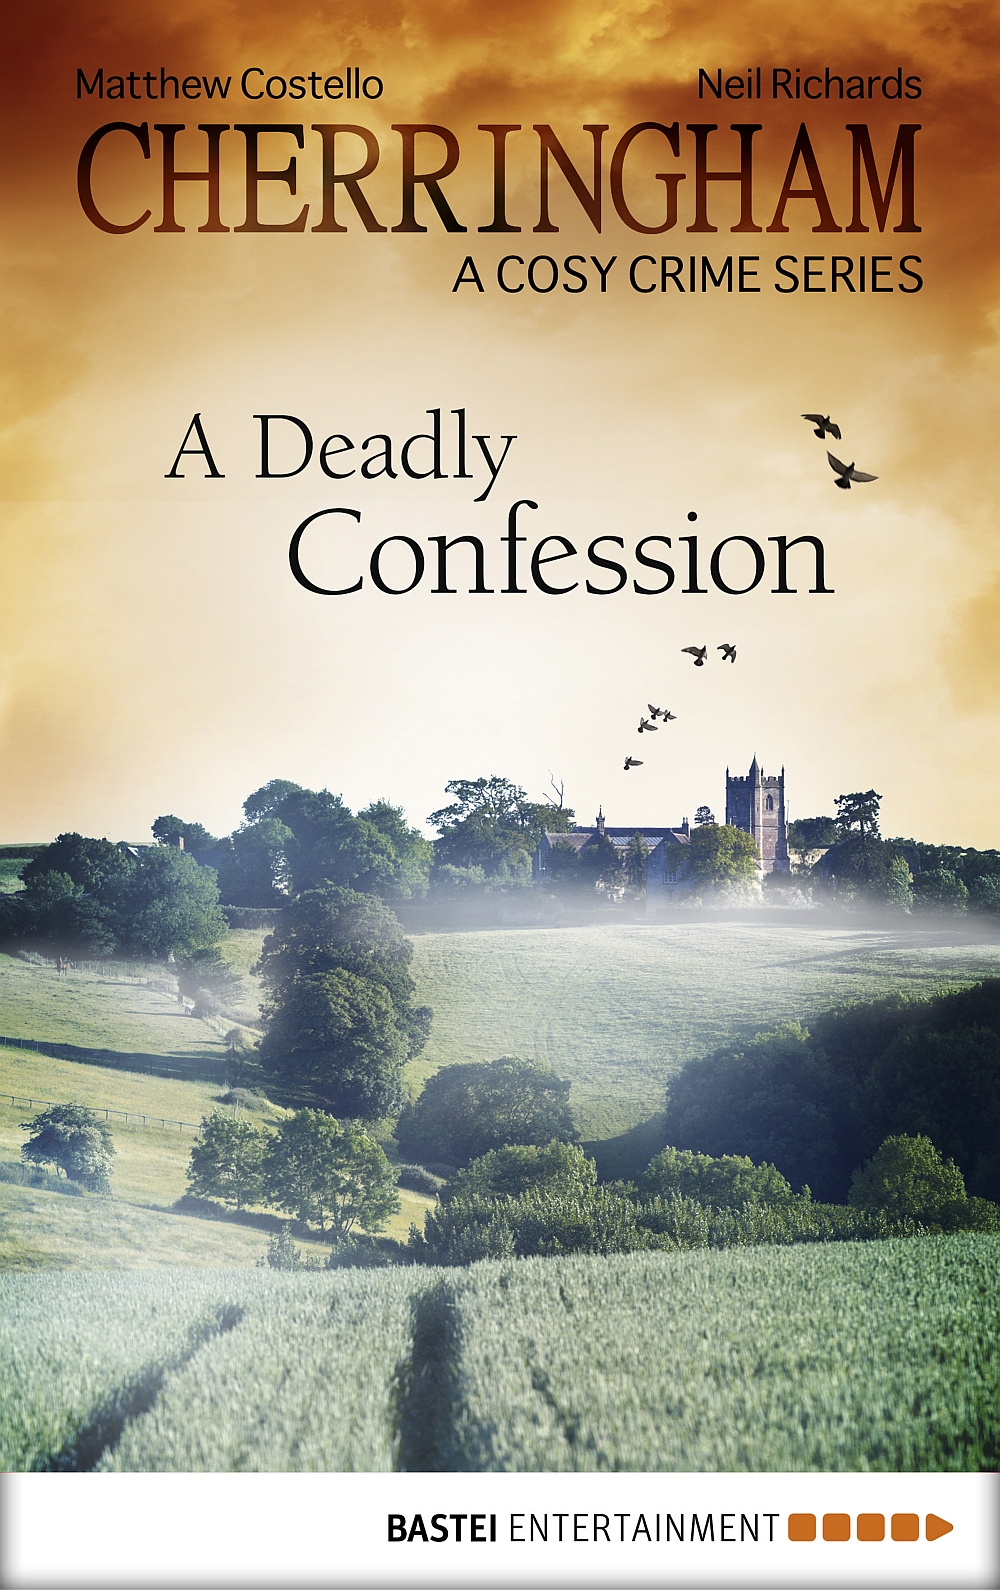 Cherringham: A Deadly Confession (2015) by Neil Richards